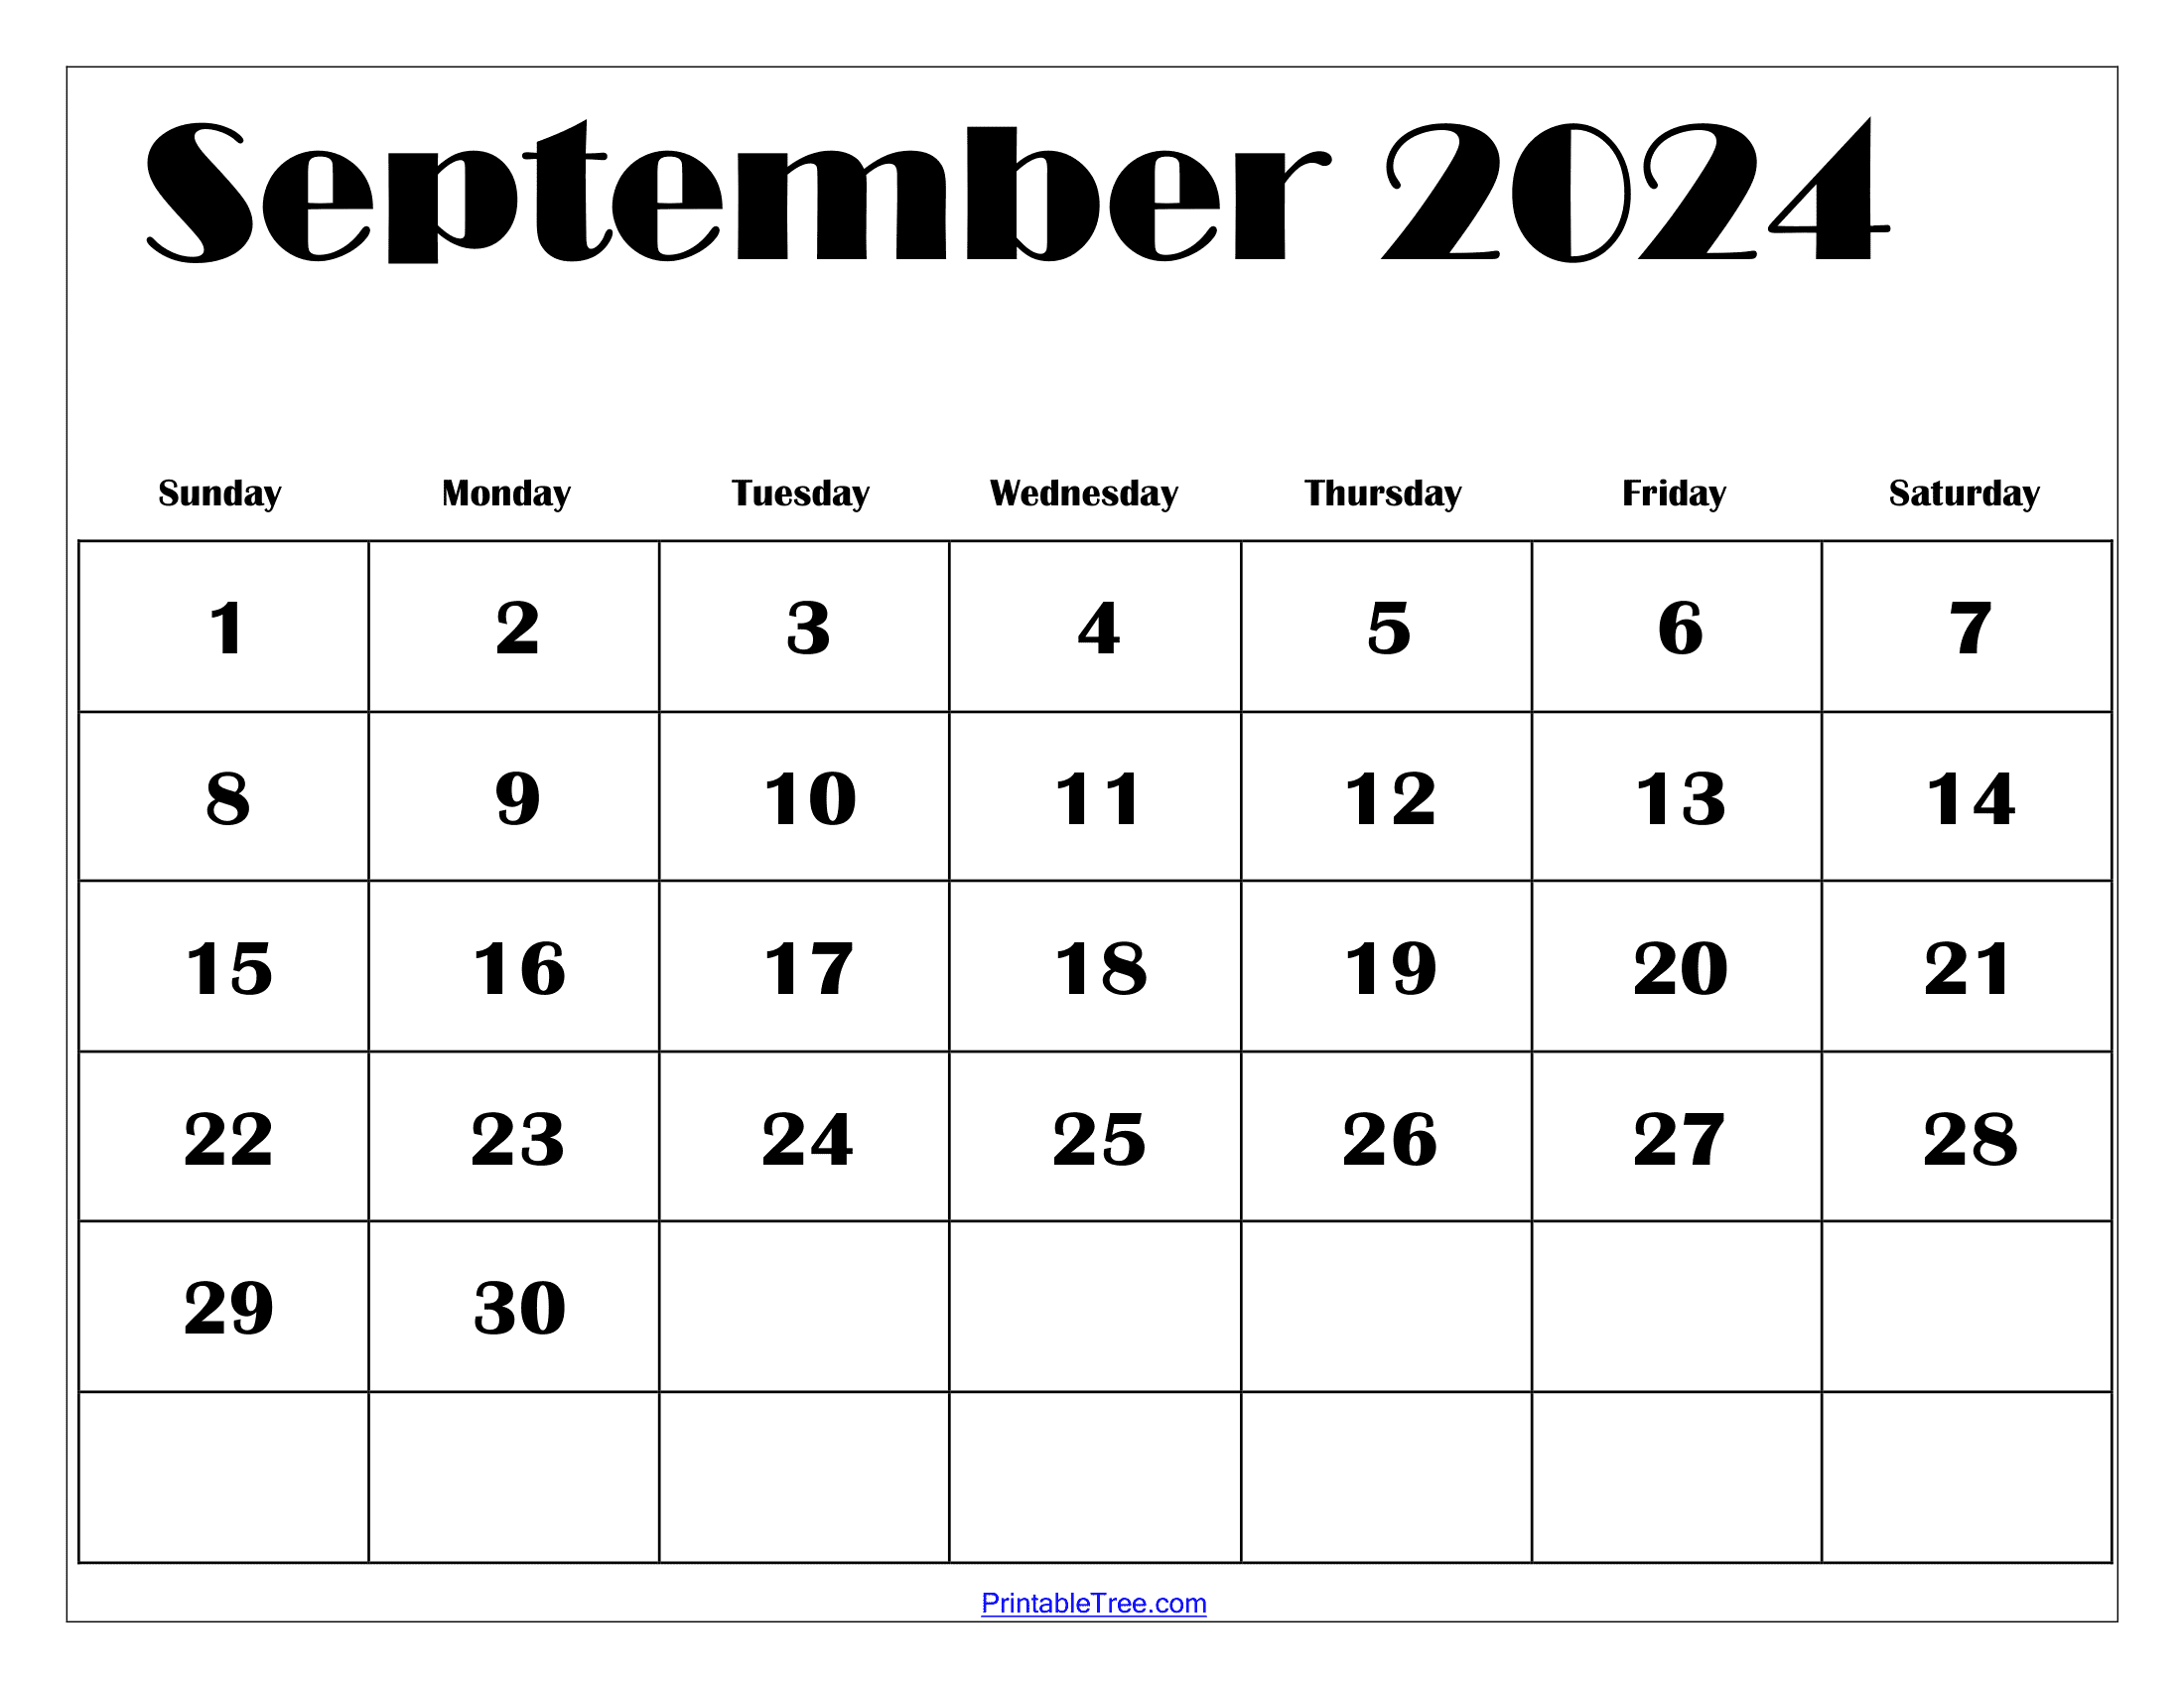 September 2024 Calendar Printable Pdf With Holidays for Free Printable September 2024 Calendar With Holidays